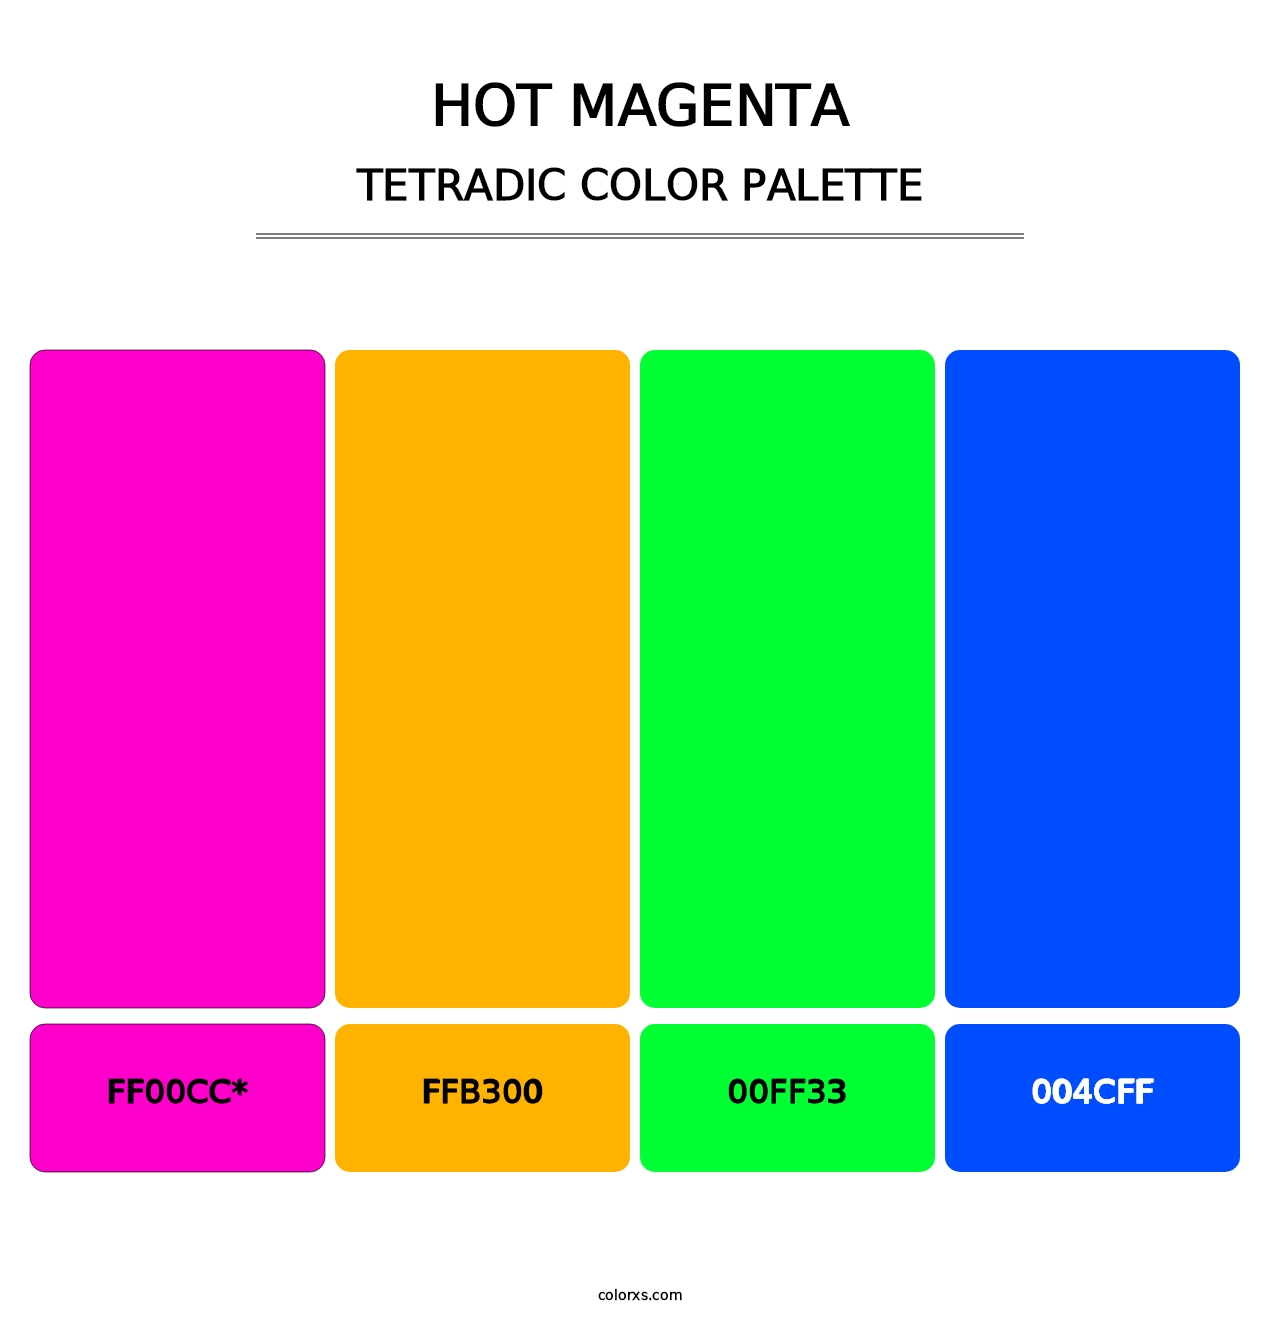 Hot Magenta - Tetradic Color Palette